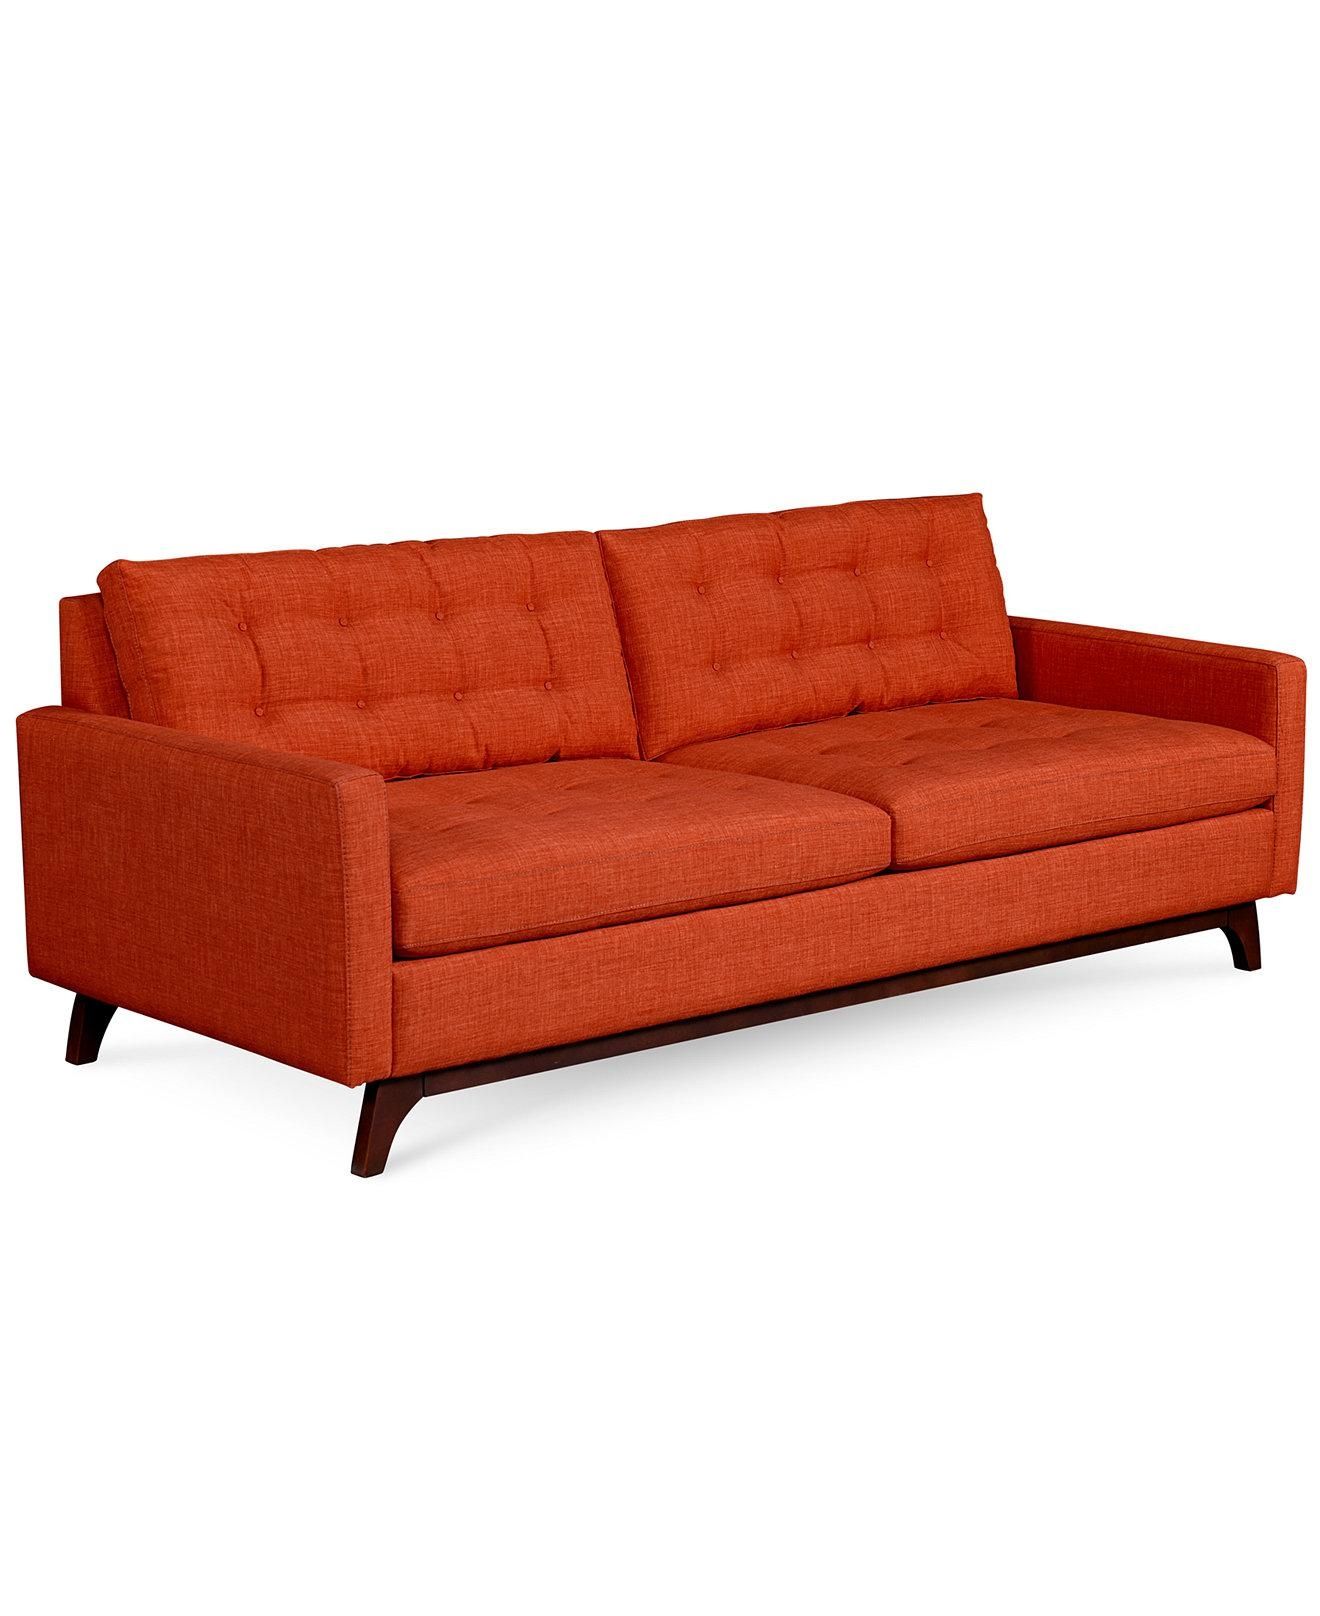 Sofas: Best Family Room Furniture Design With Elegant Macys Sofa Inside Macys Sofas (View 3 of 20)